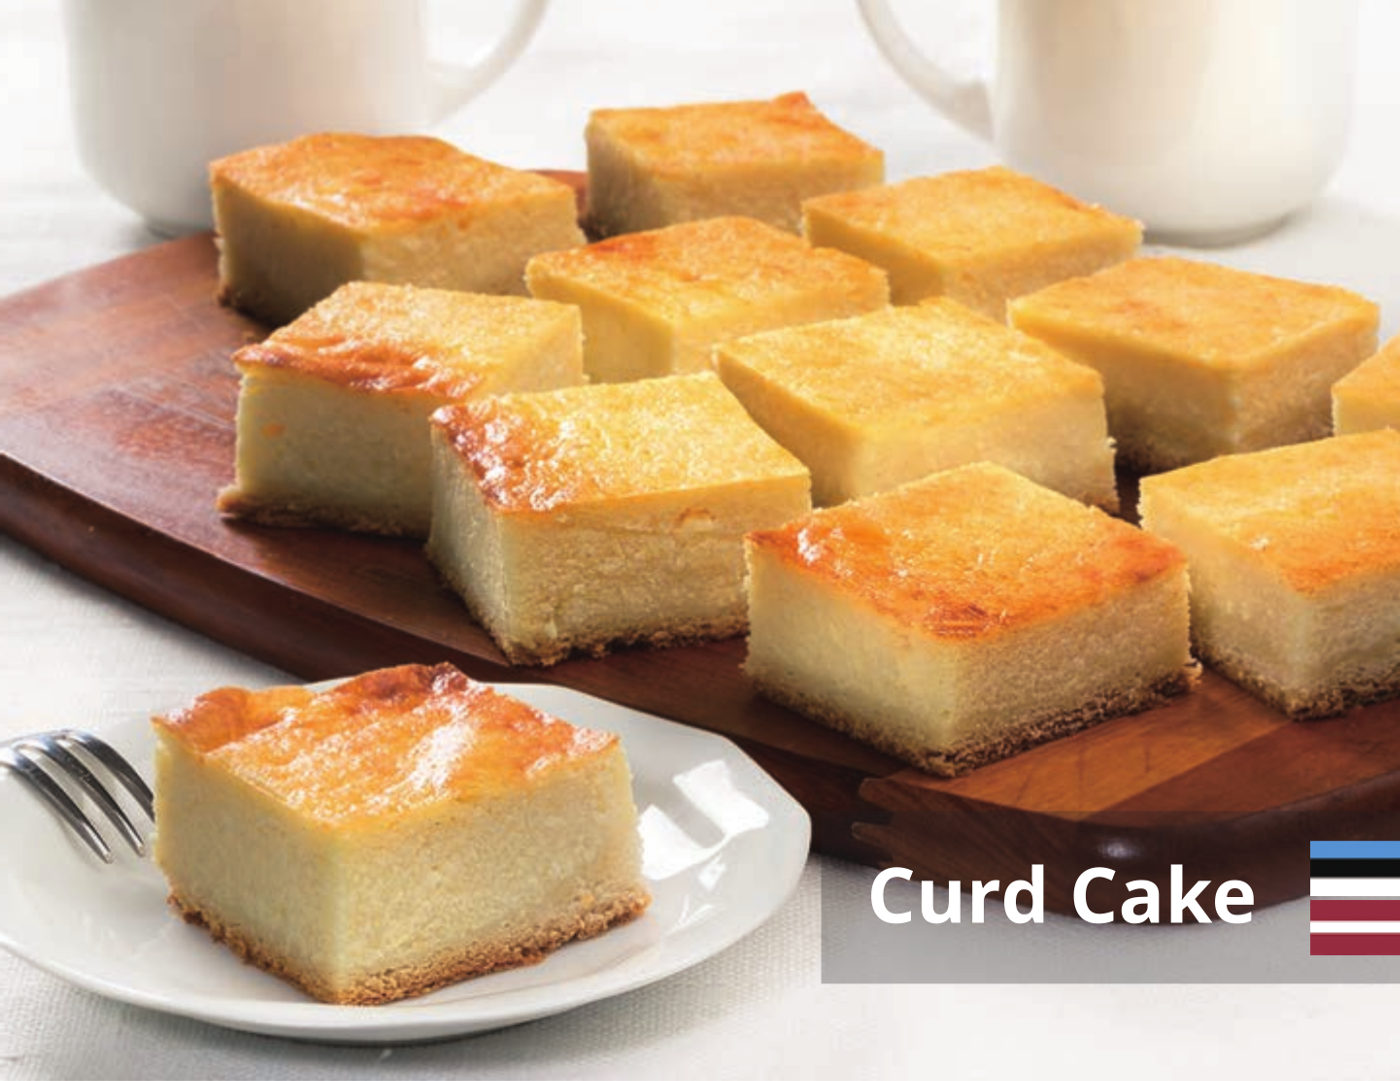 Curd Cake